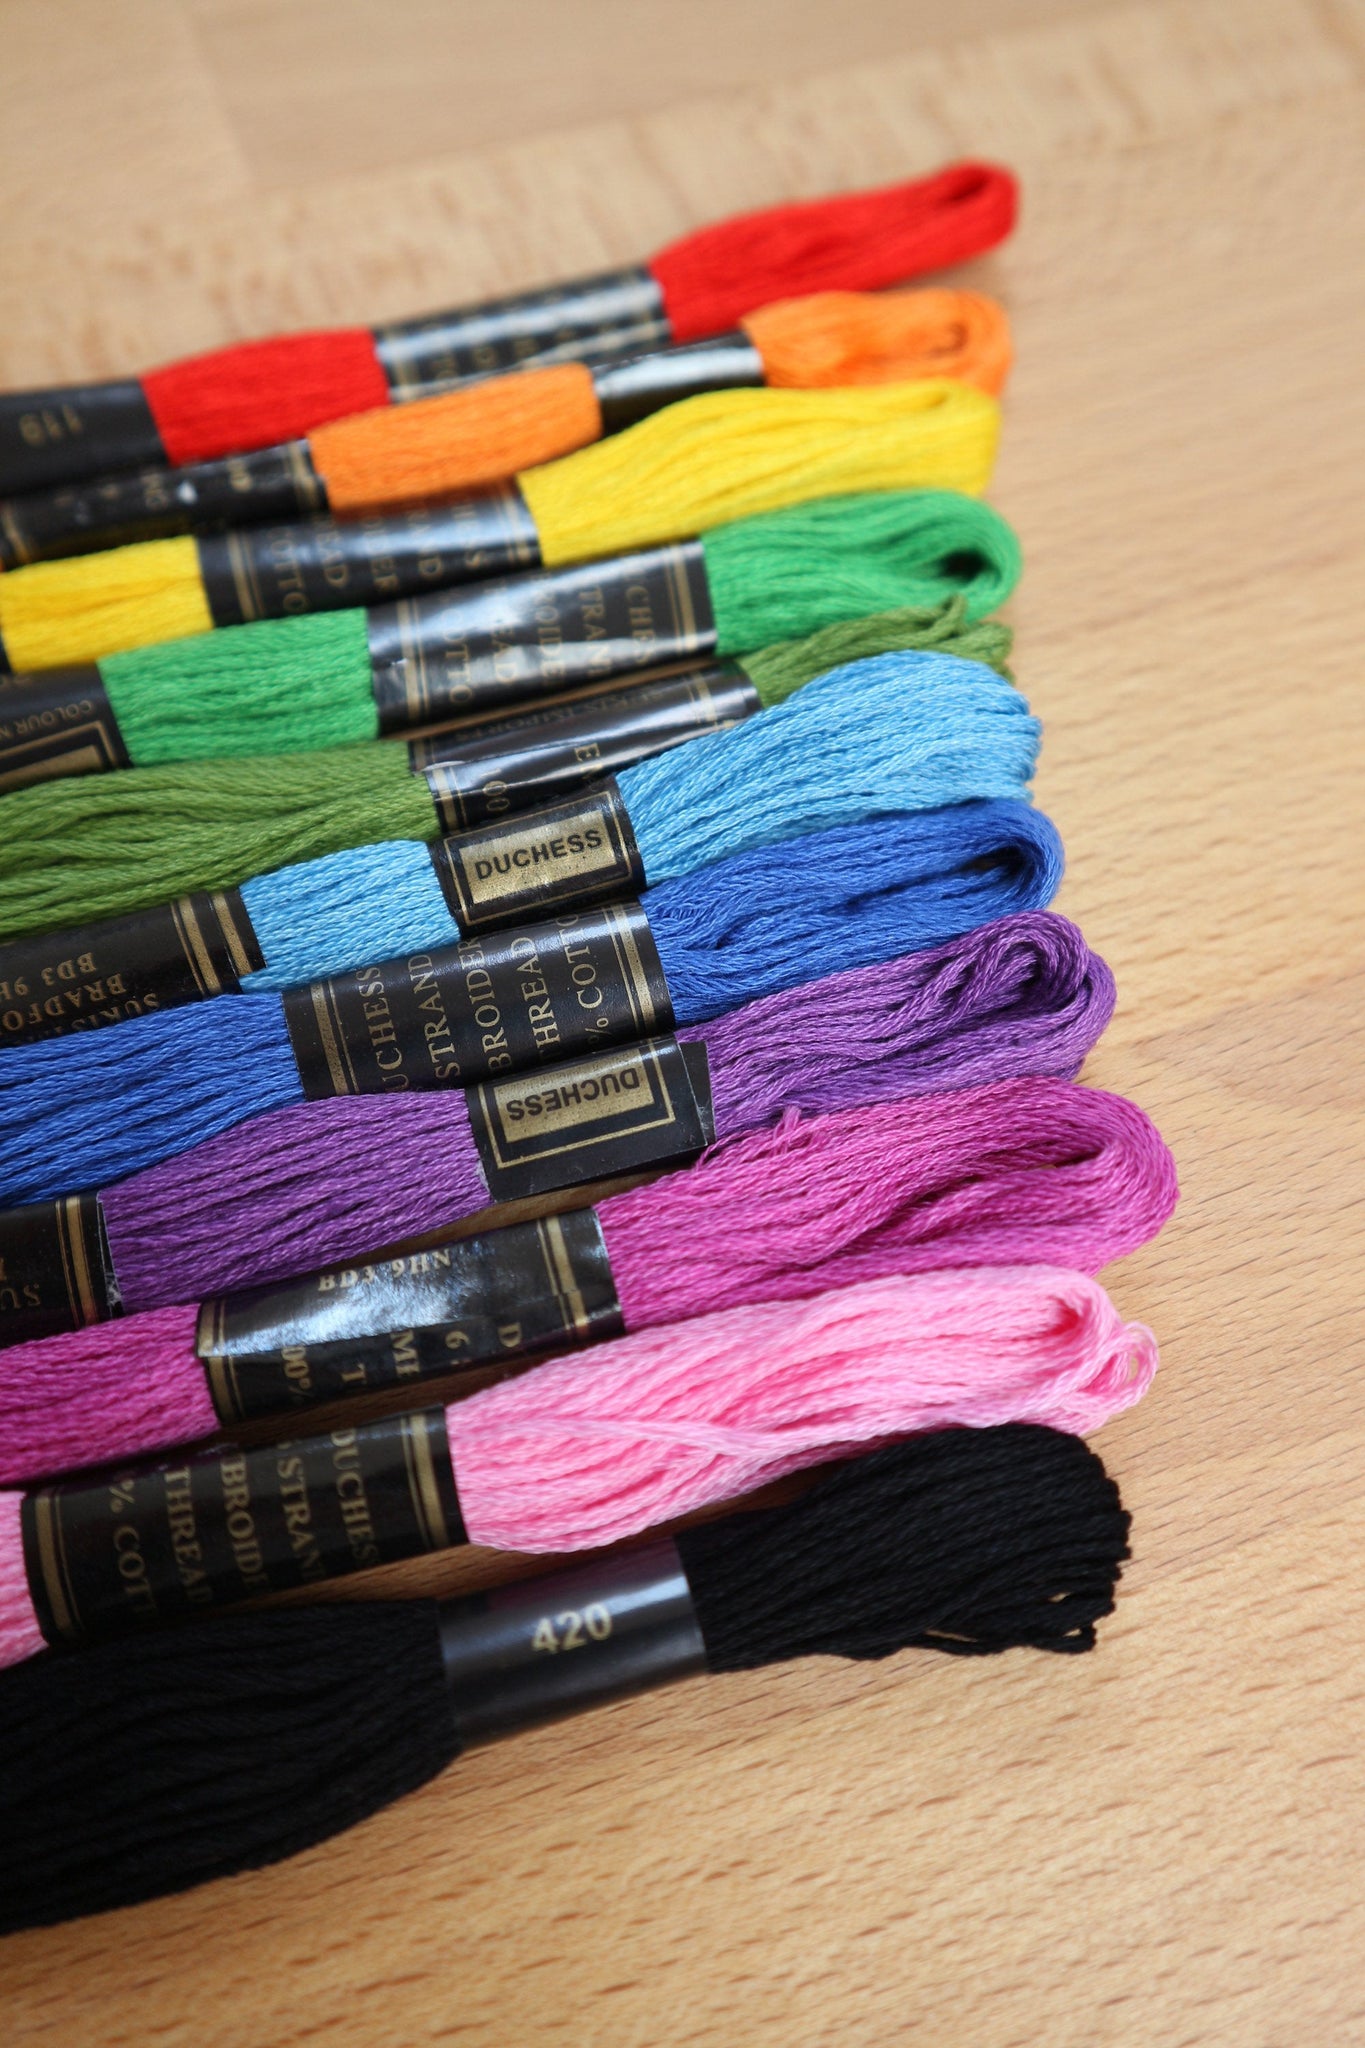 OTTO Embroidery Thread Kit 